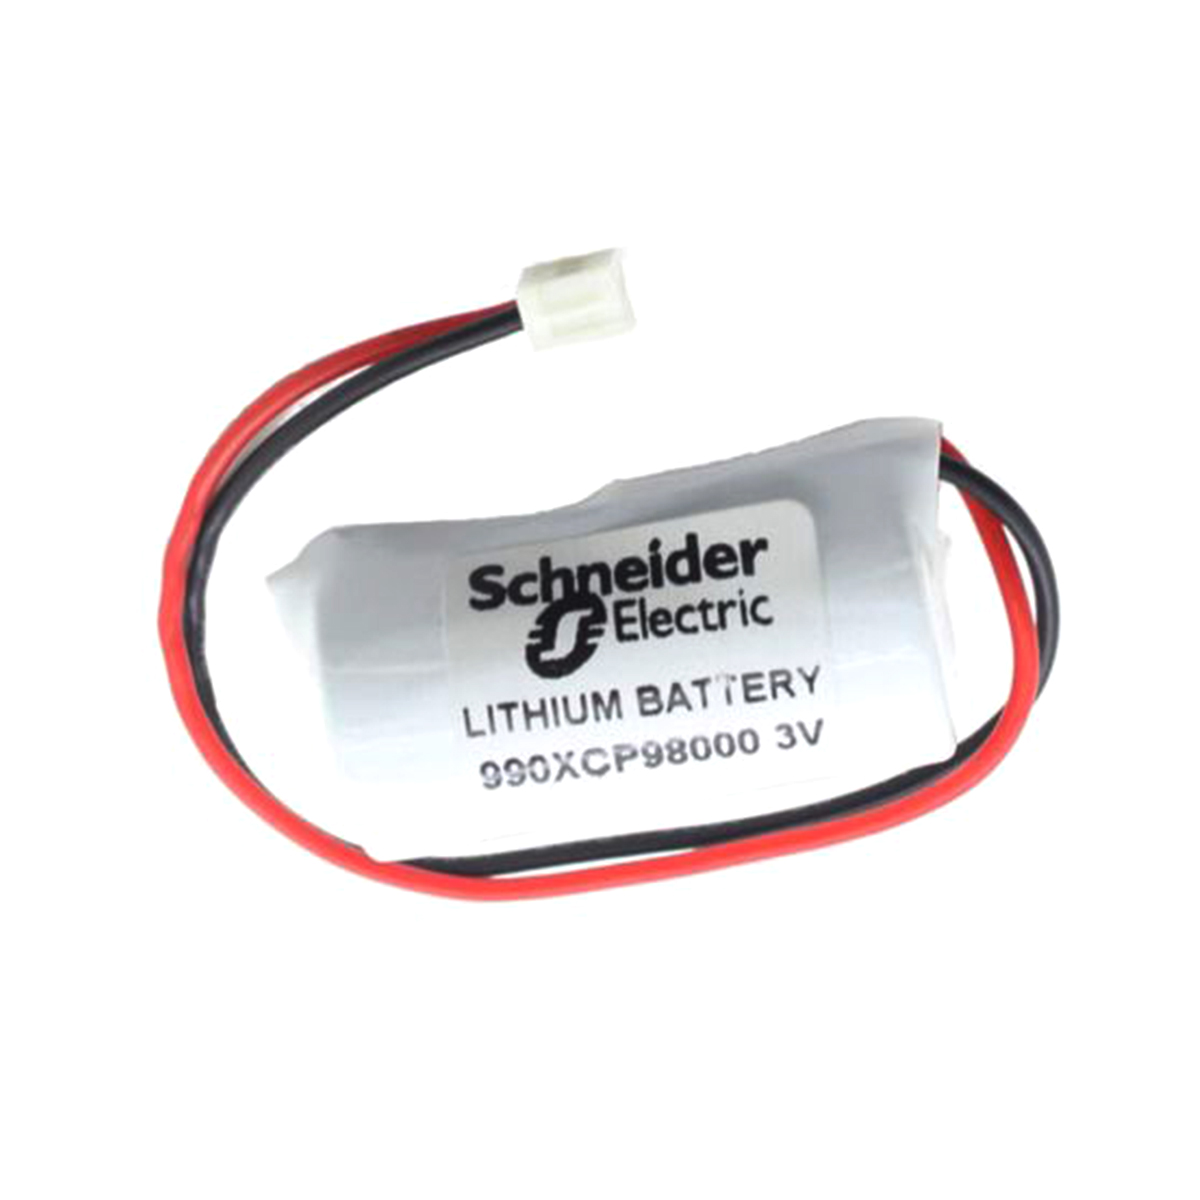 Schneider Electric 990XCP98000